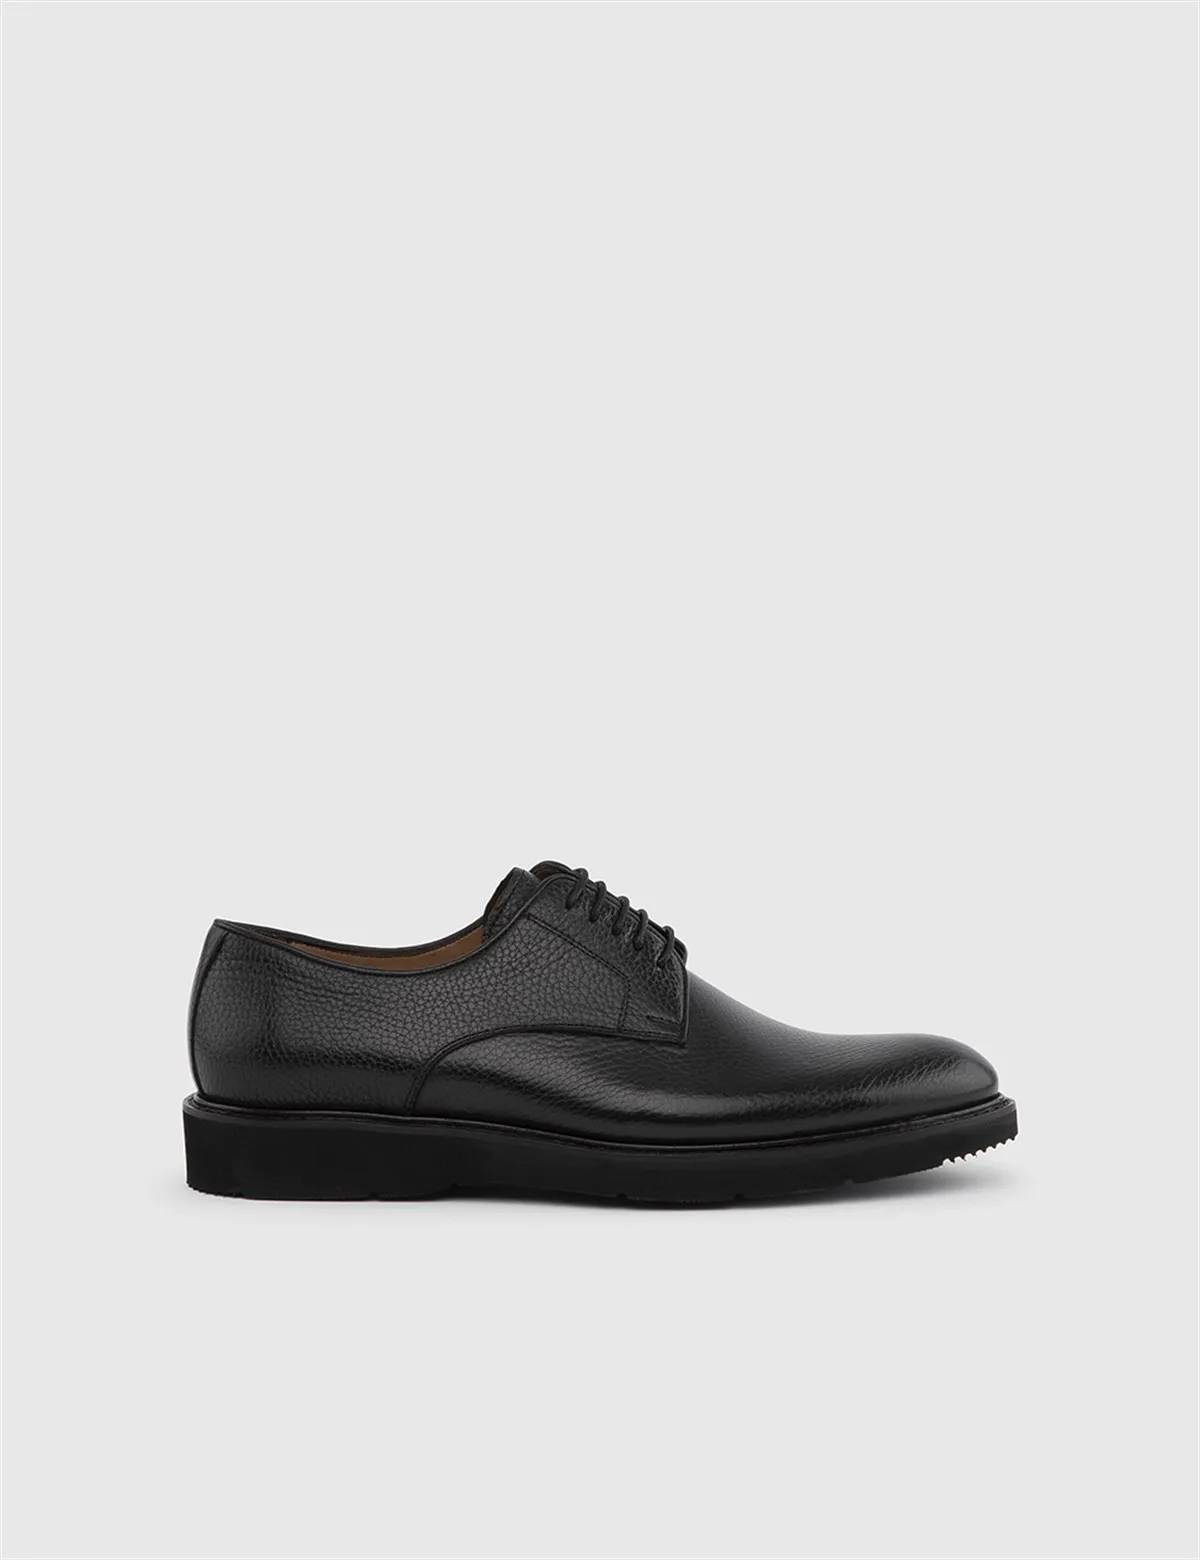 

ILVi-Genuine Leather Handmade Pauli Black Floater Leather Men's Daily Shoe Man's Shoes 2022 Fall/Winter